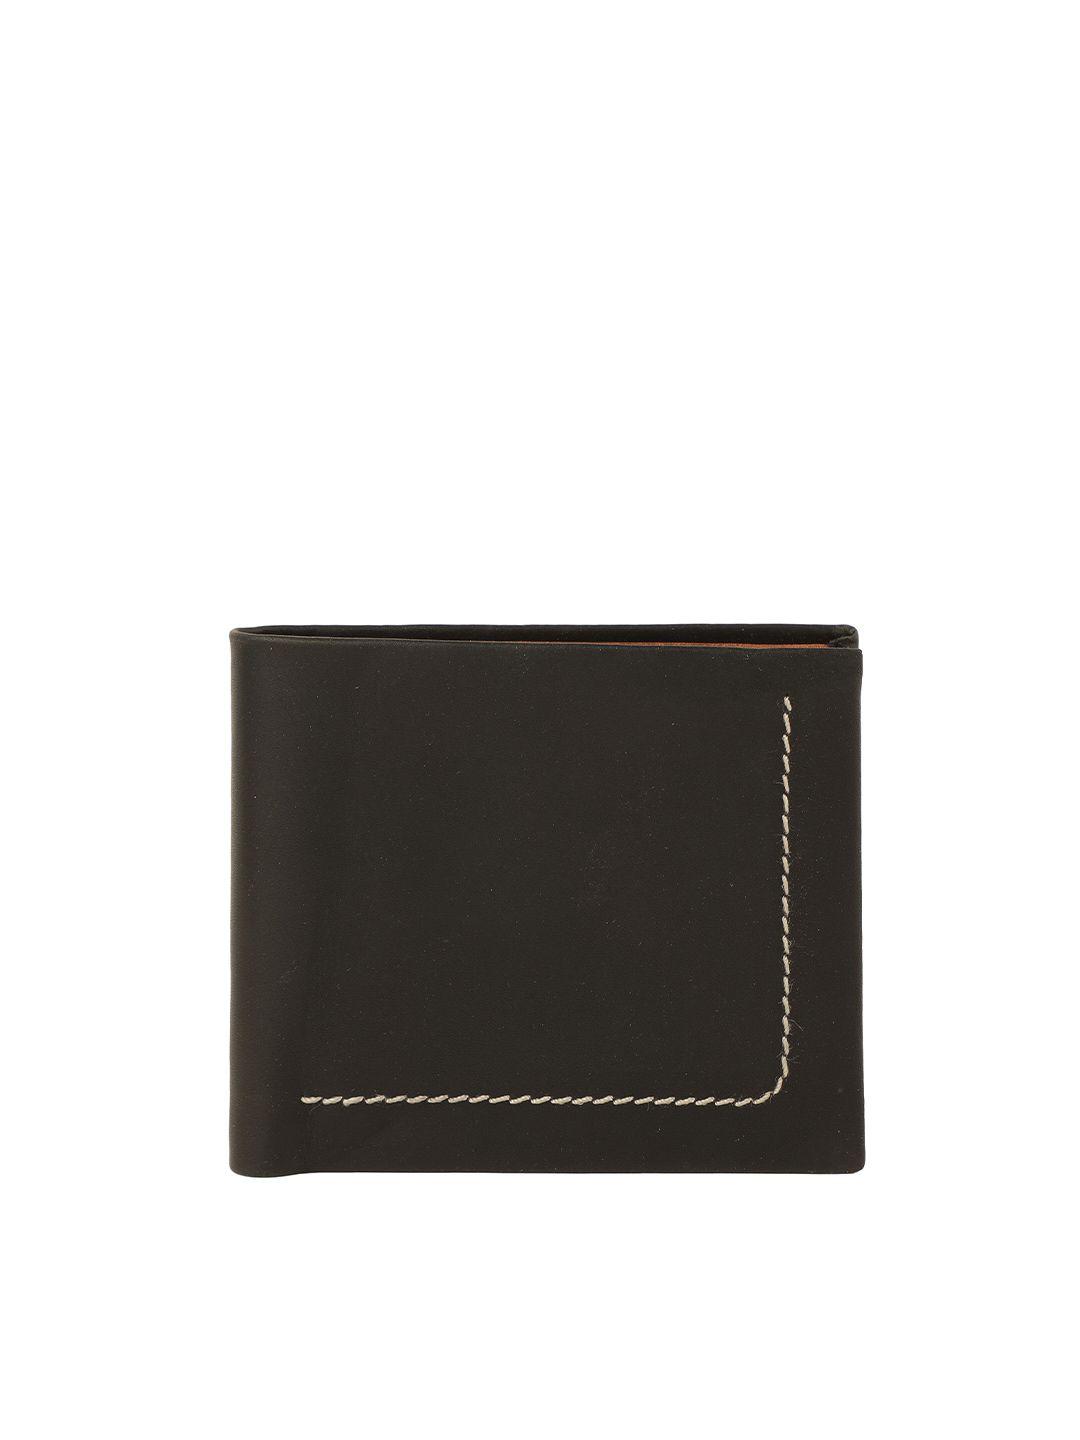 alvaro castagnino men black & brown leather two fold wallet